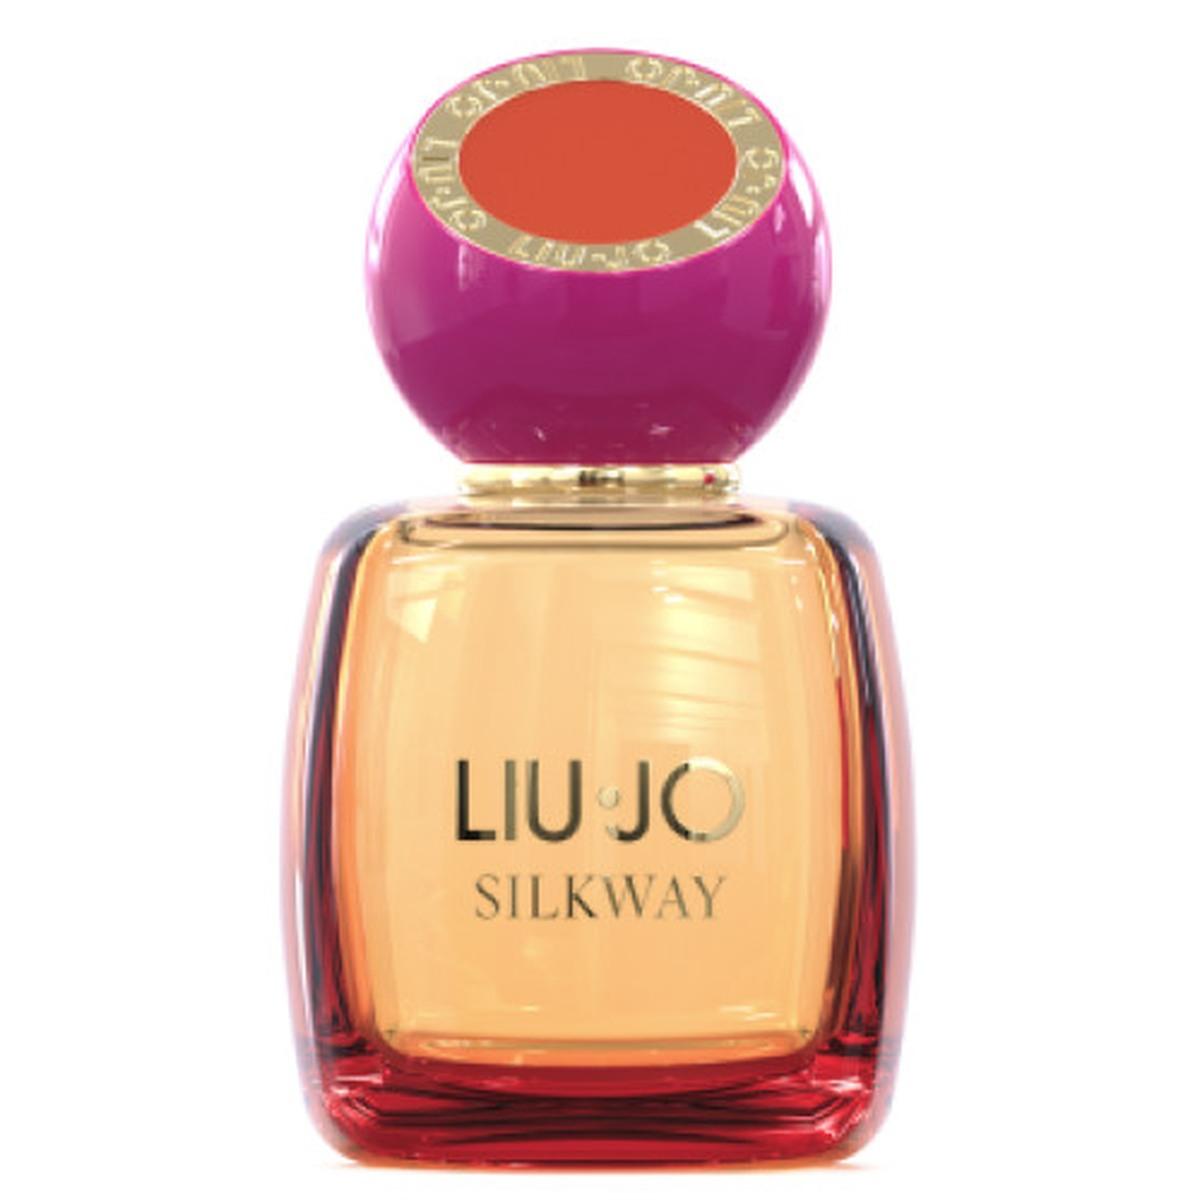 Silkway 30 ml